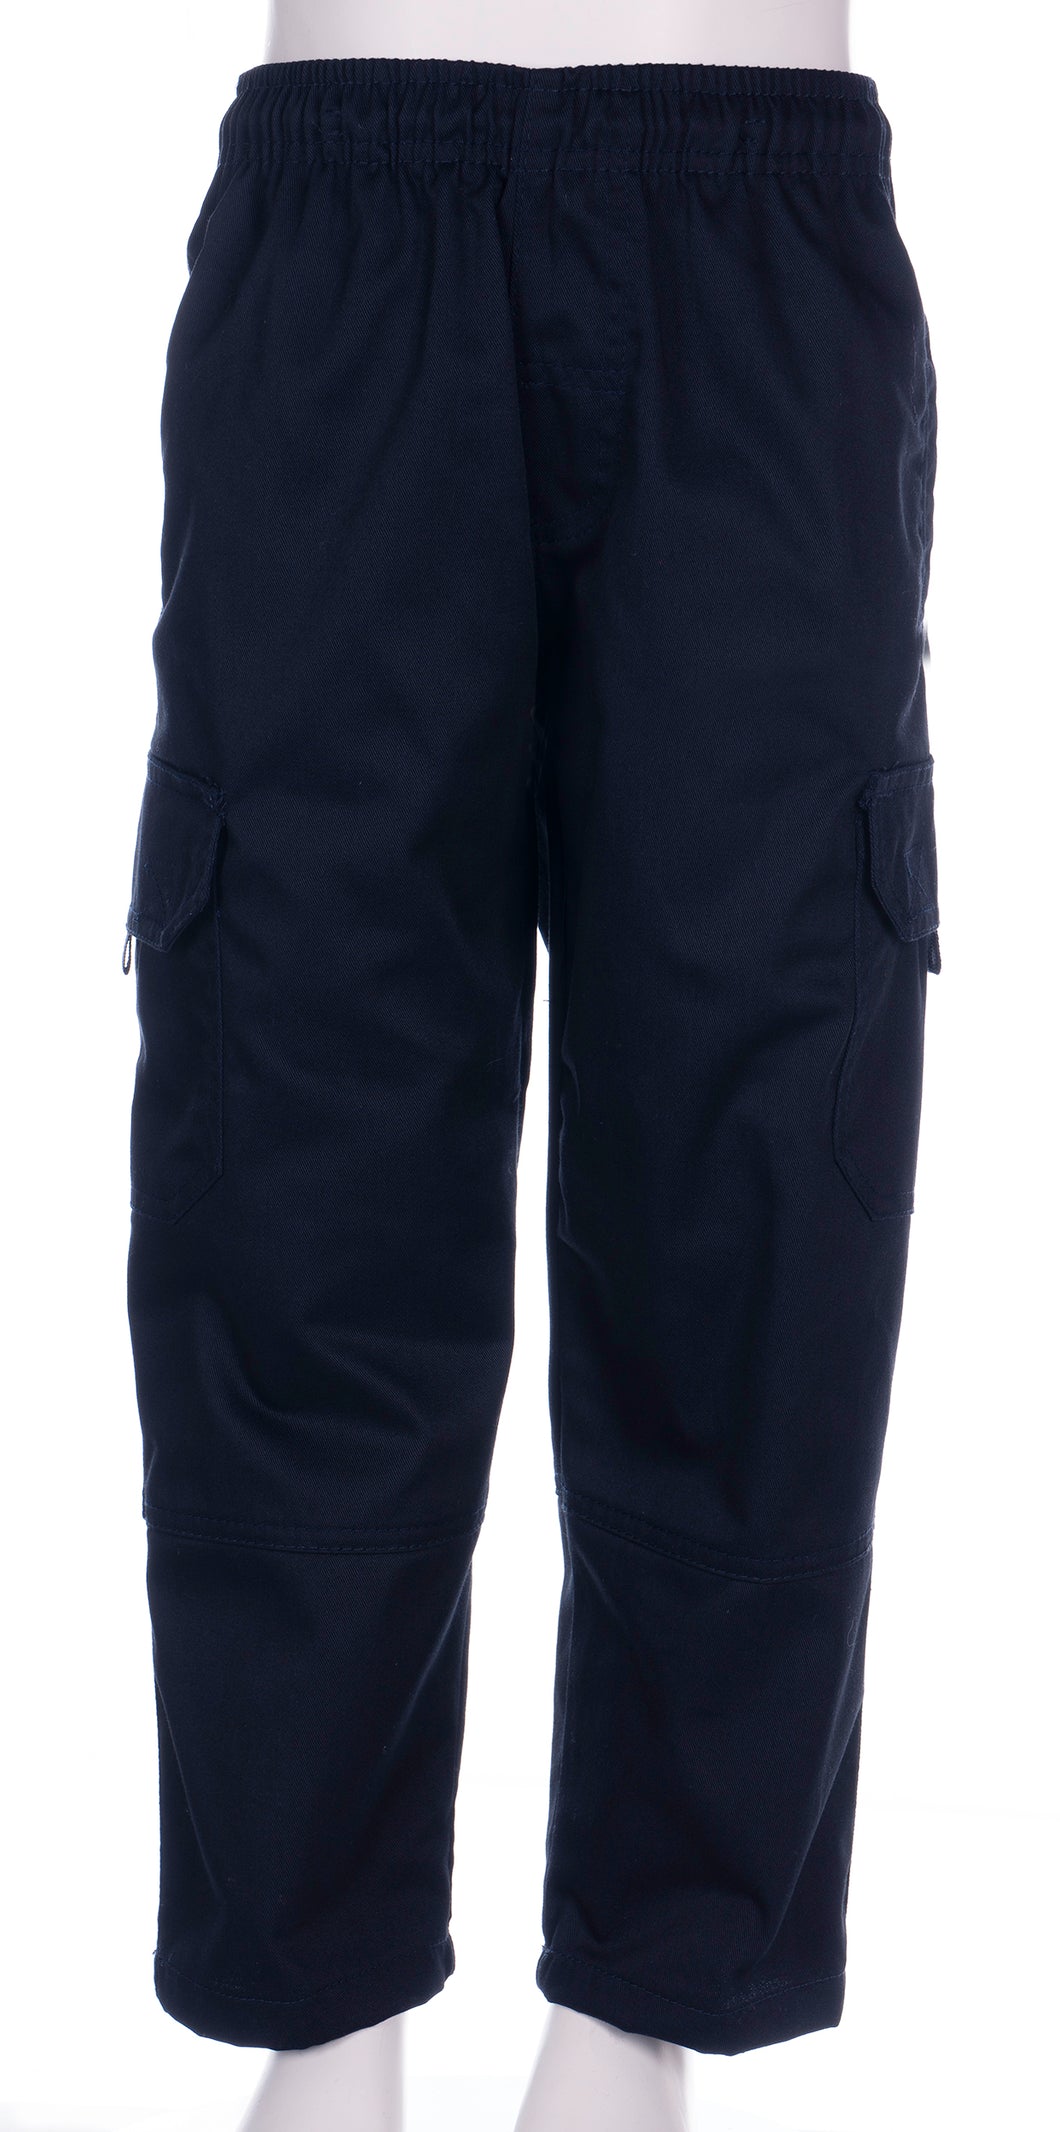 Henderson Primary School - Cargo Pants Navy